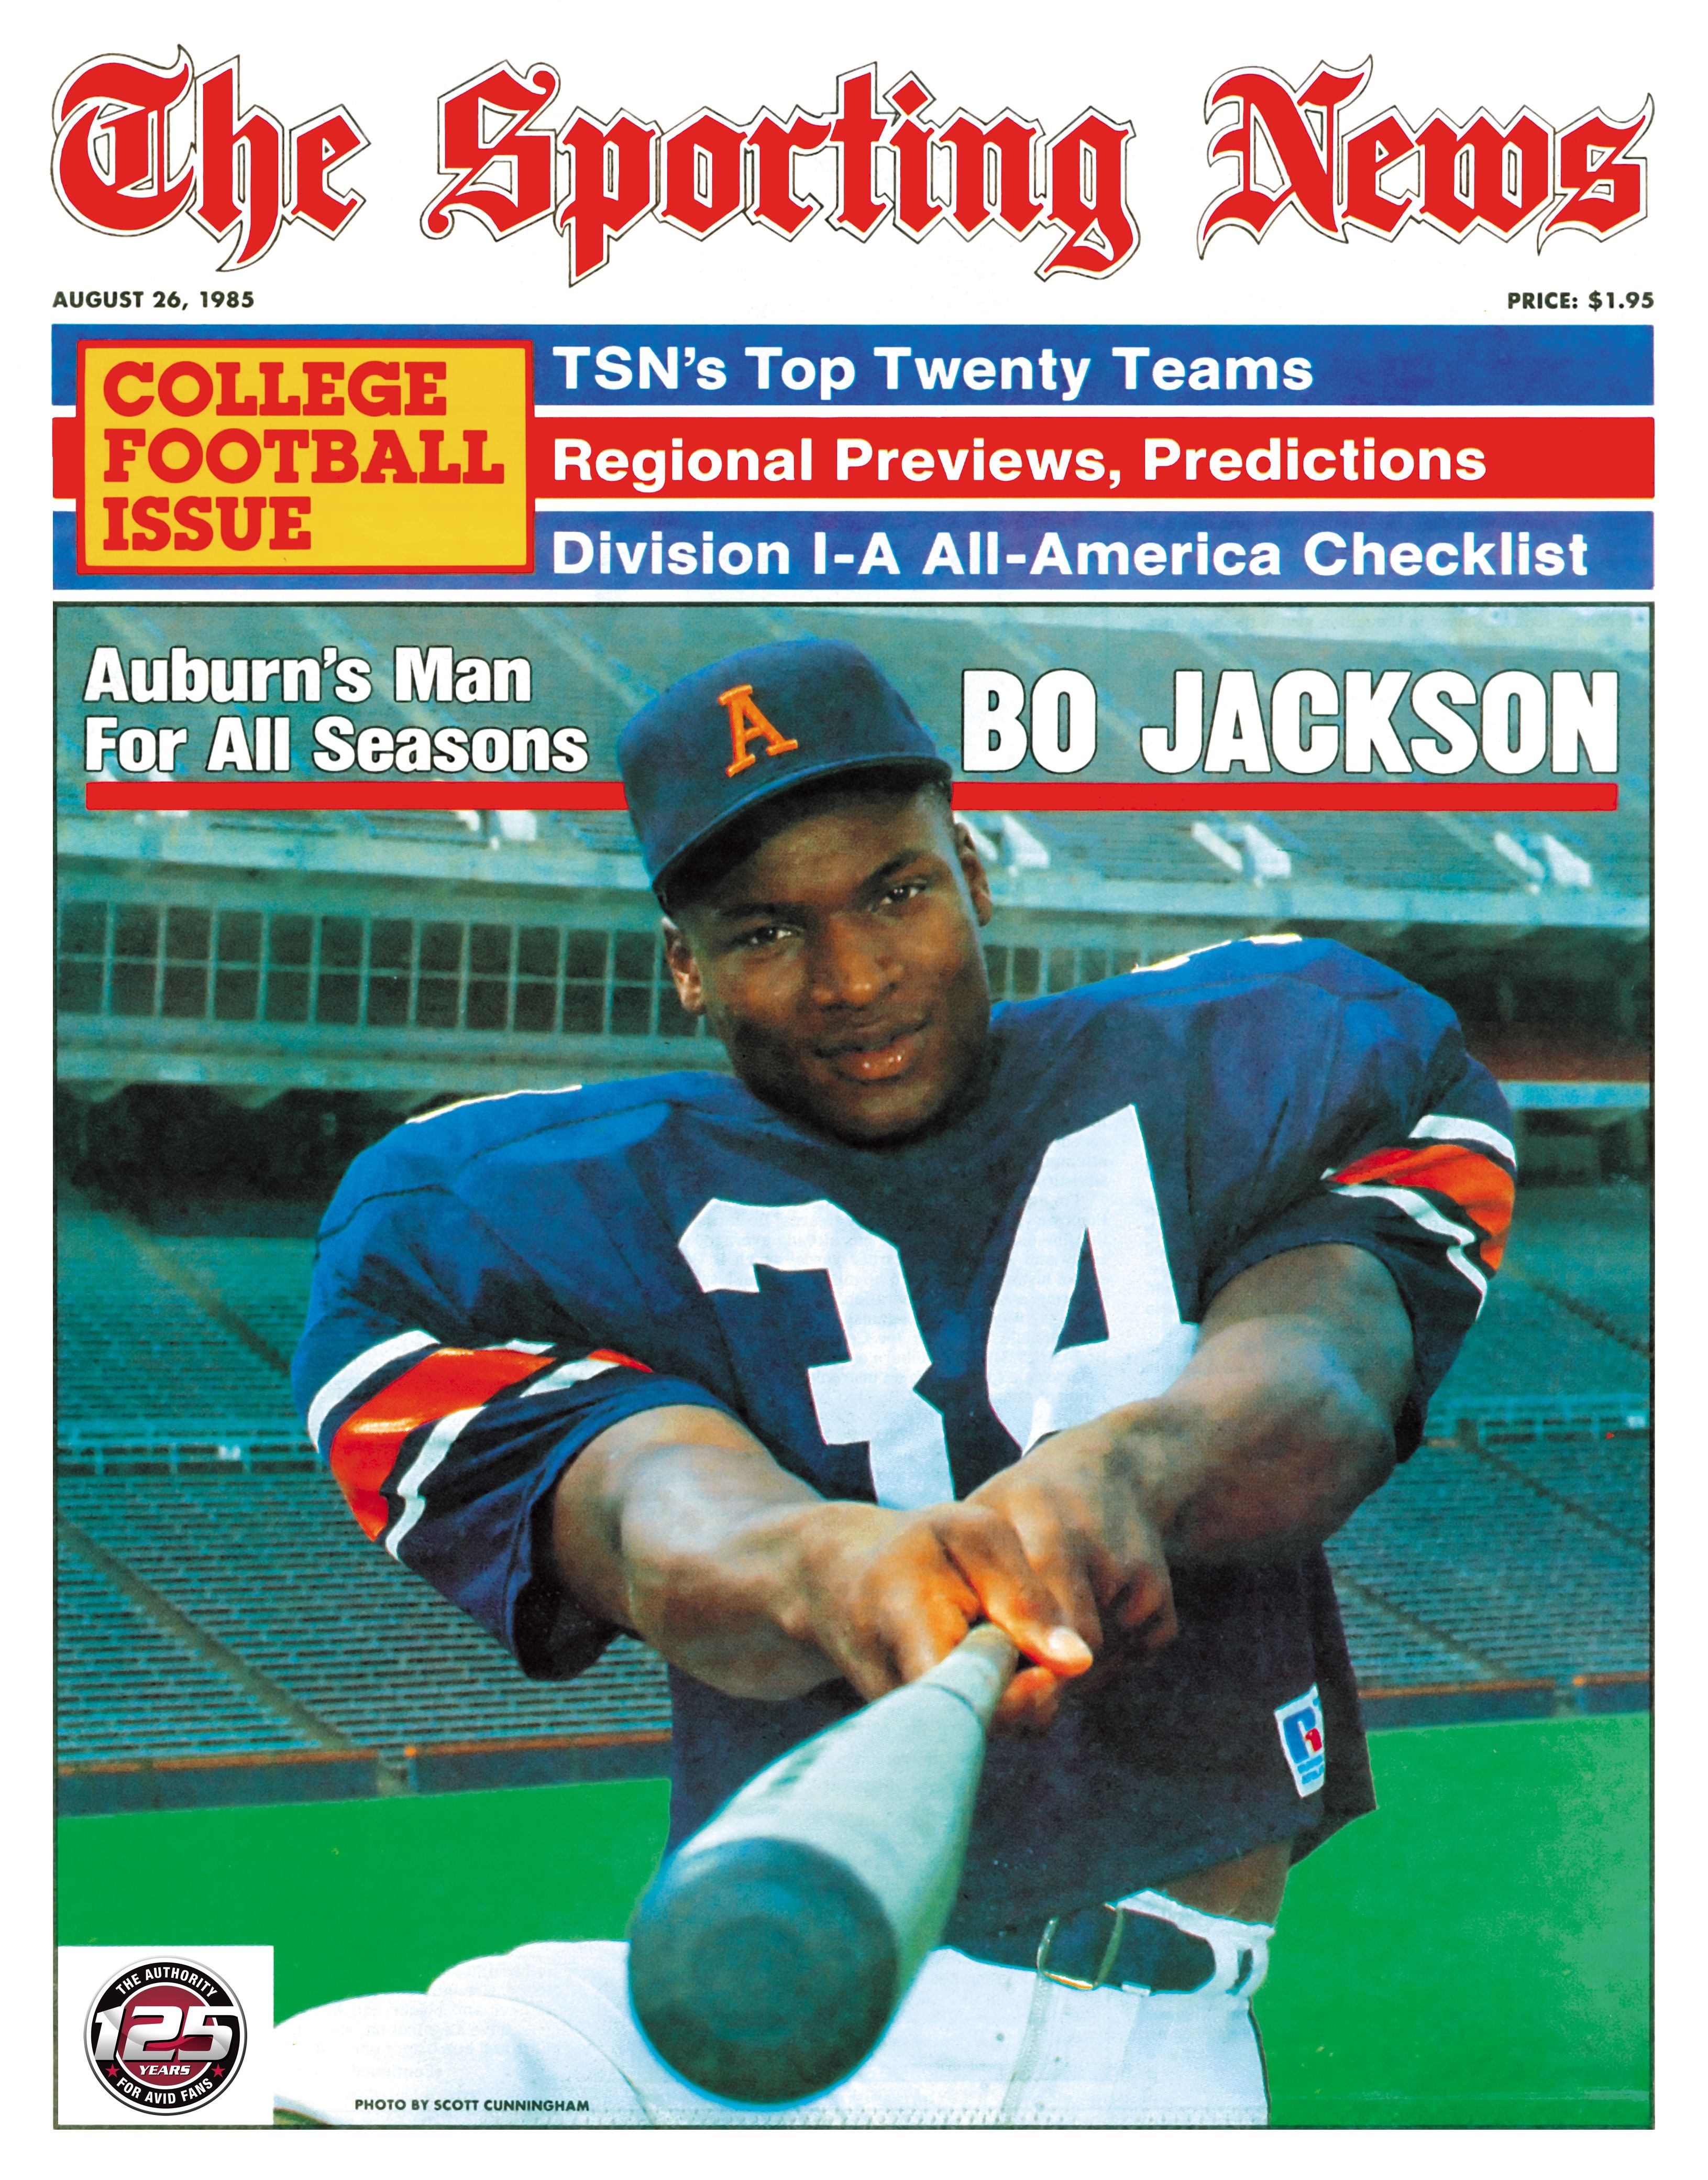 Bo Jackson magazine cover